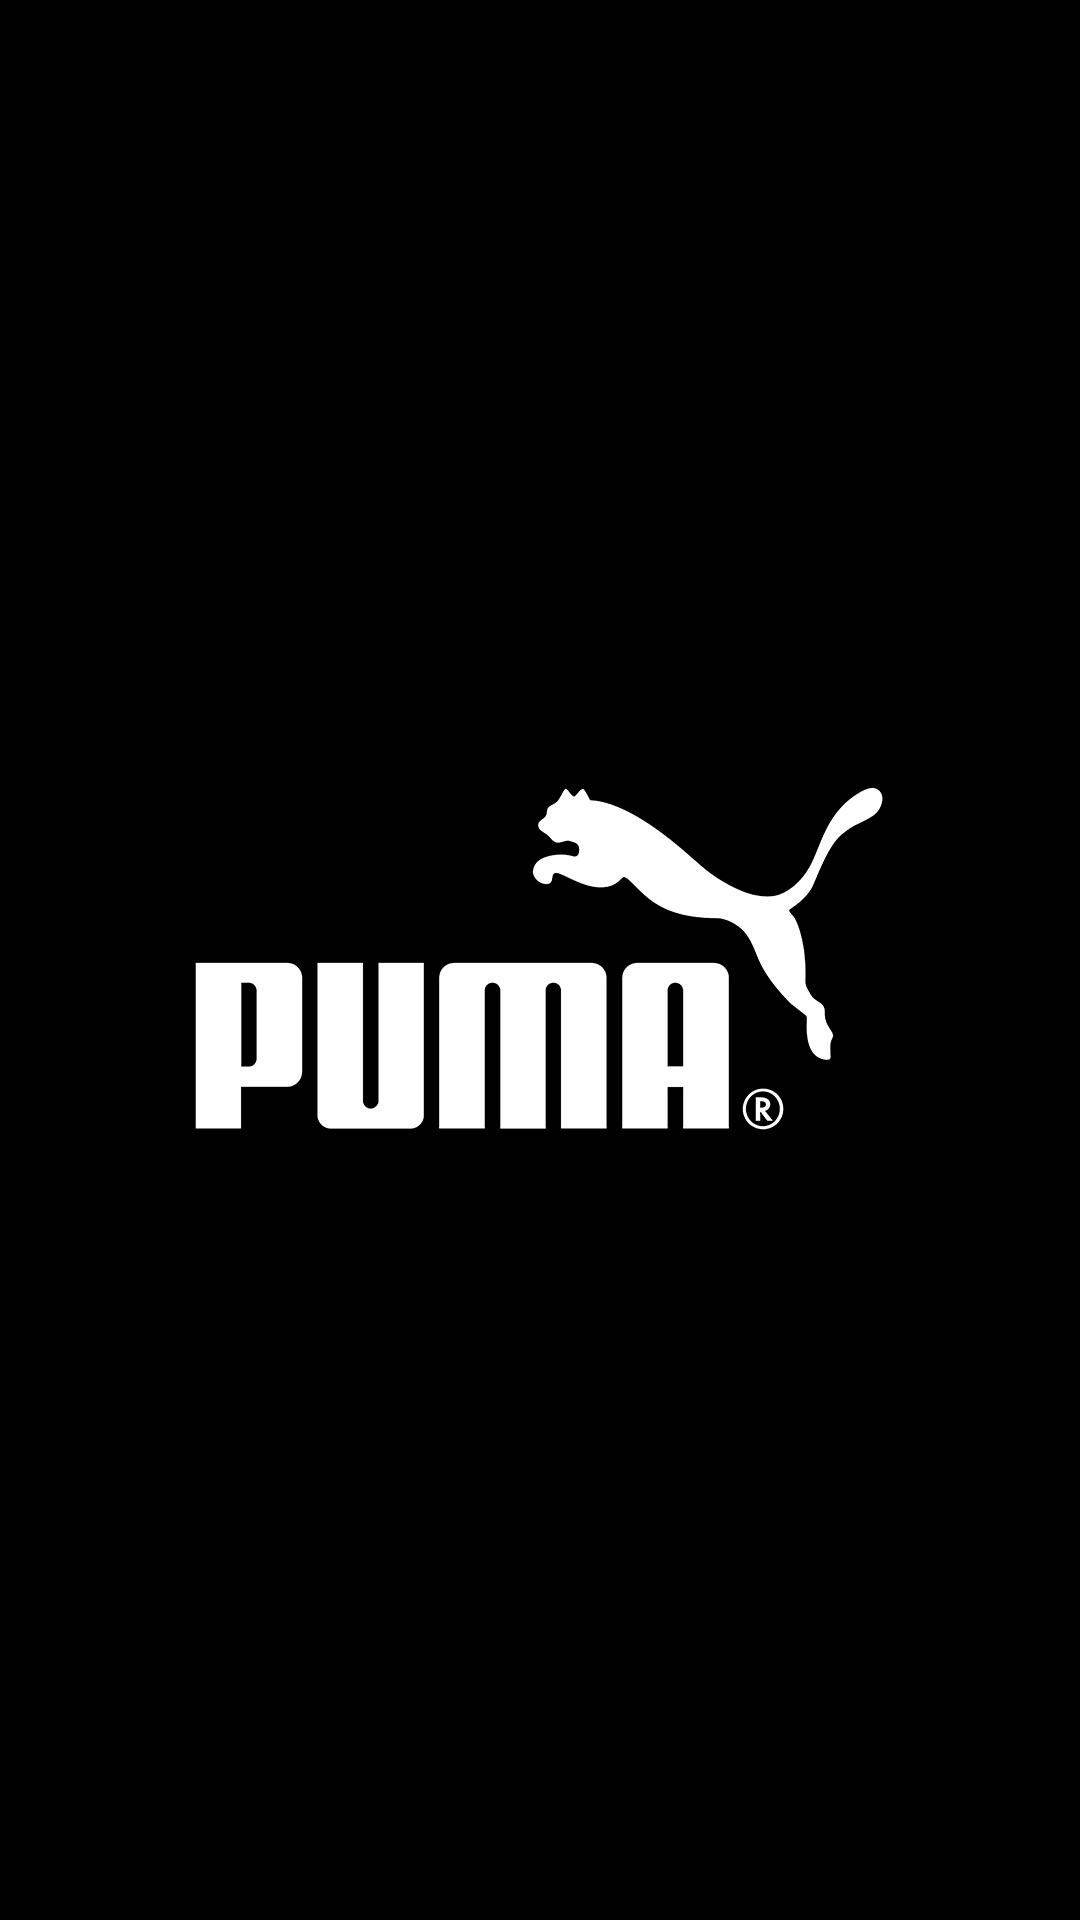 Pumaclassic Logotyp Wallpaper